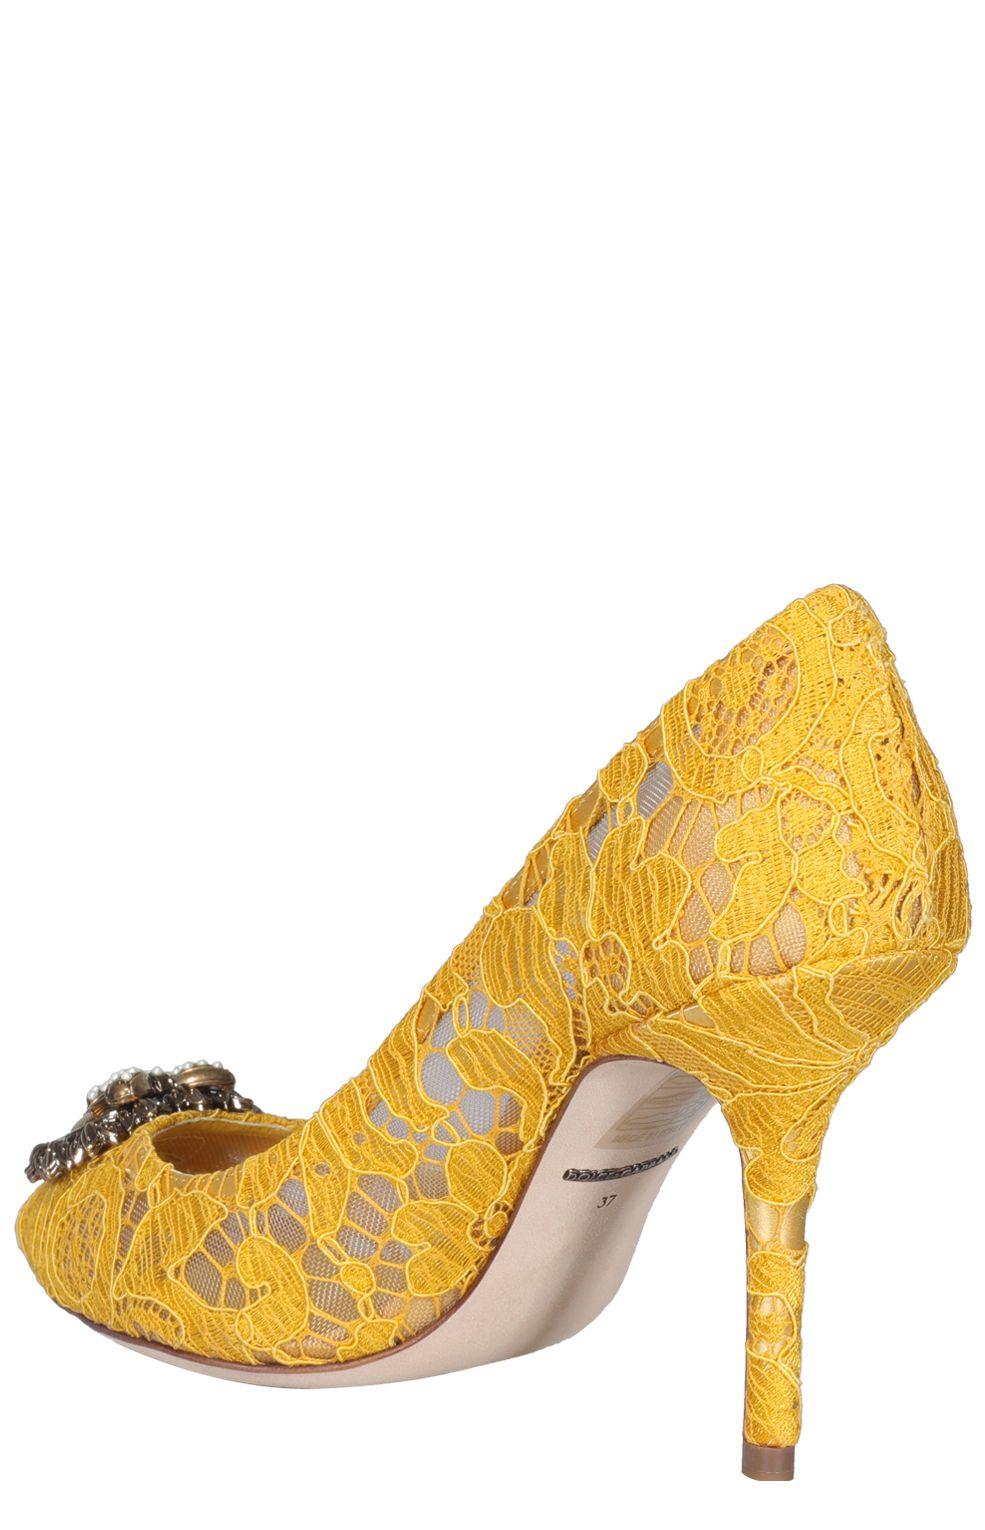 Dolce & Gabbana Taormina Devotion Heart Lace Pumps in Yellow | Lyst